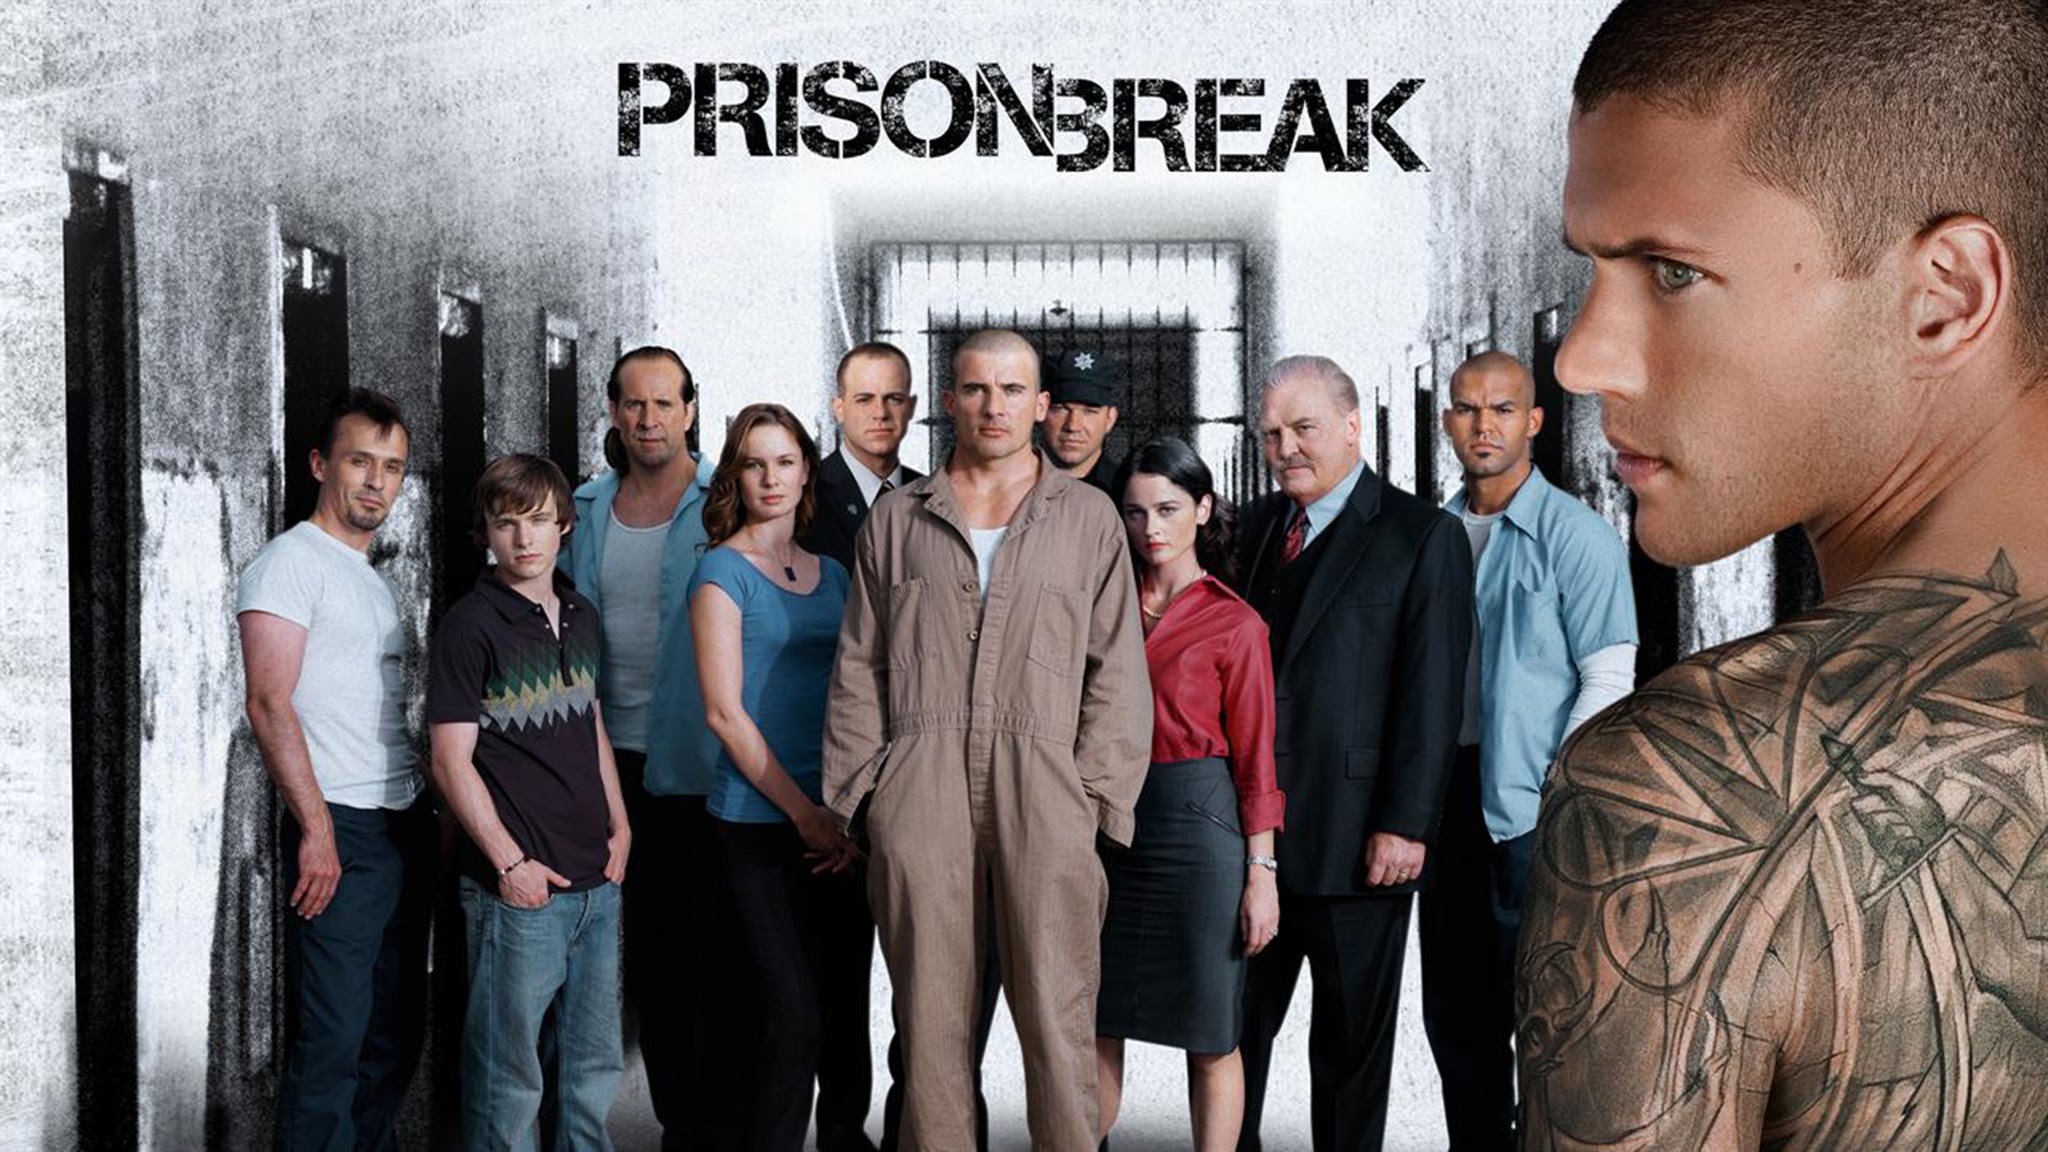 Amazing Prison Break Pictures & Backgrounds